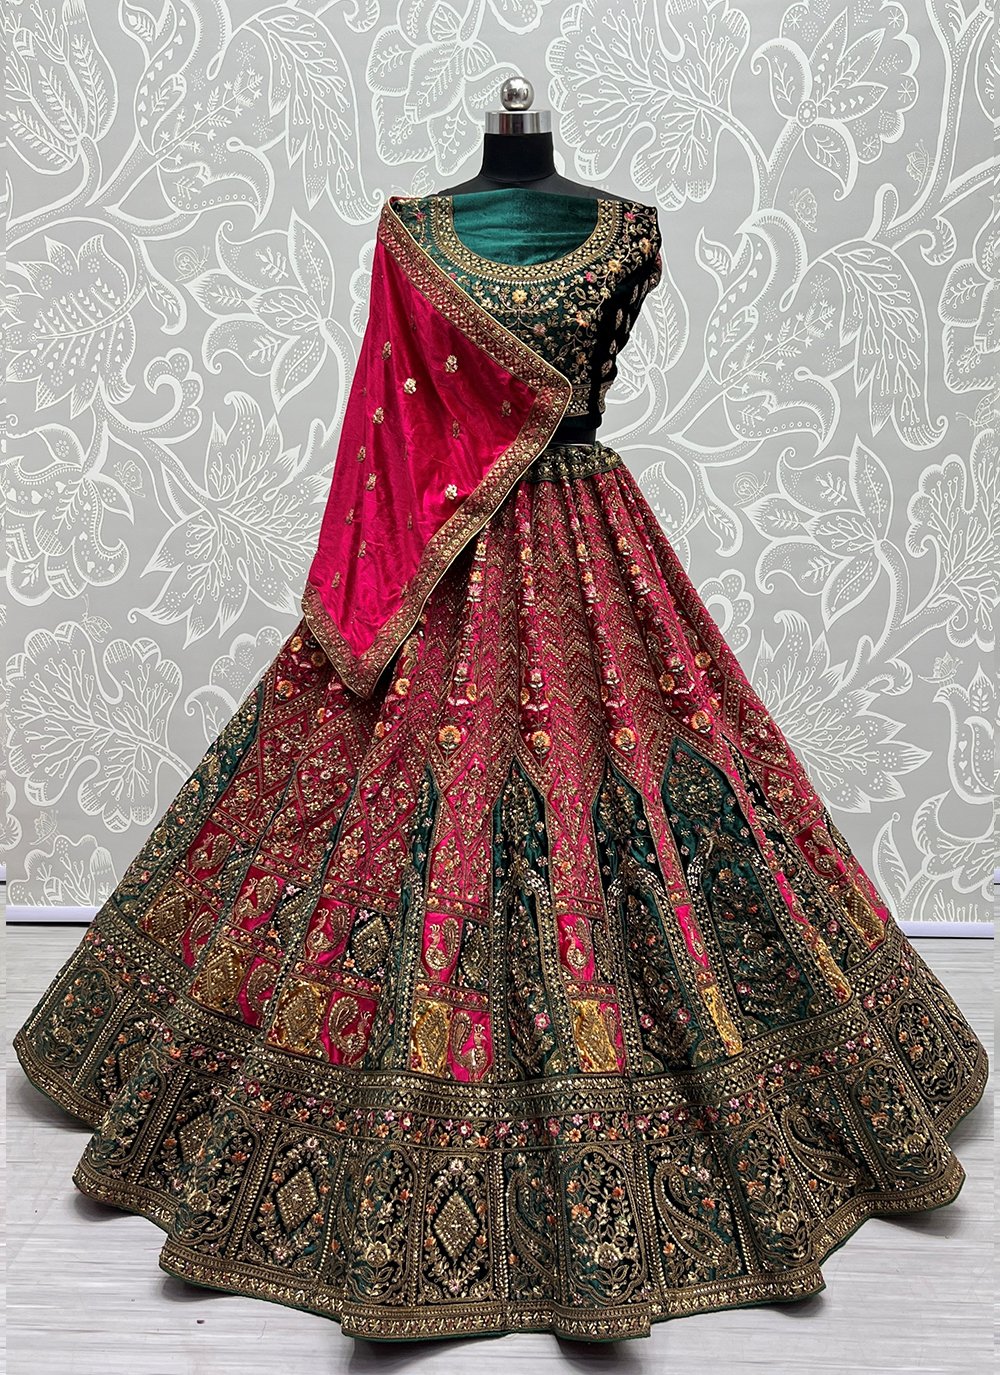 Breathtaking veil shots & splendid red bridal lehenga that will steal your  heart❤ Outfit @plumtin_motif Makeup… | Instagram